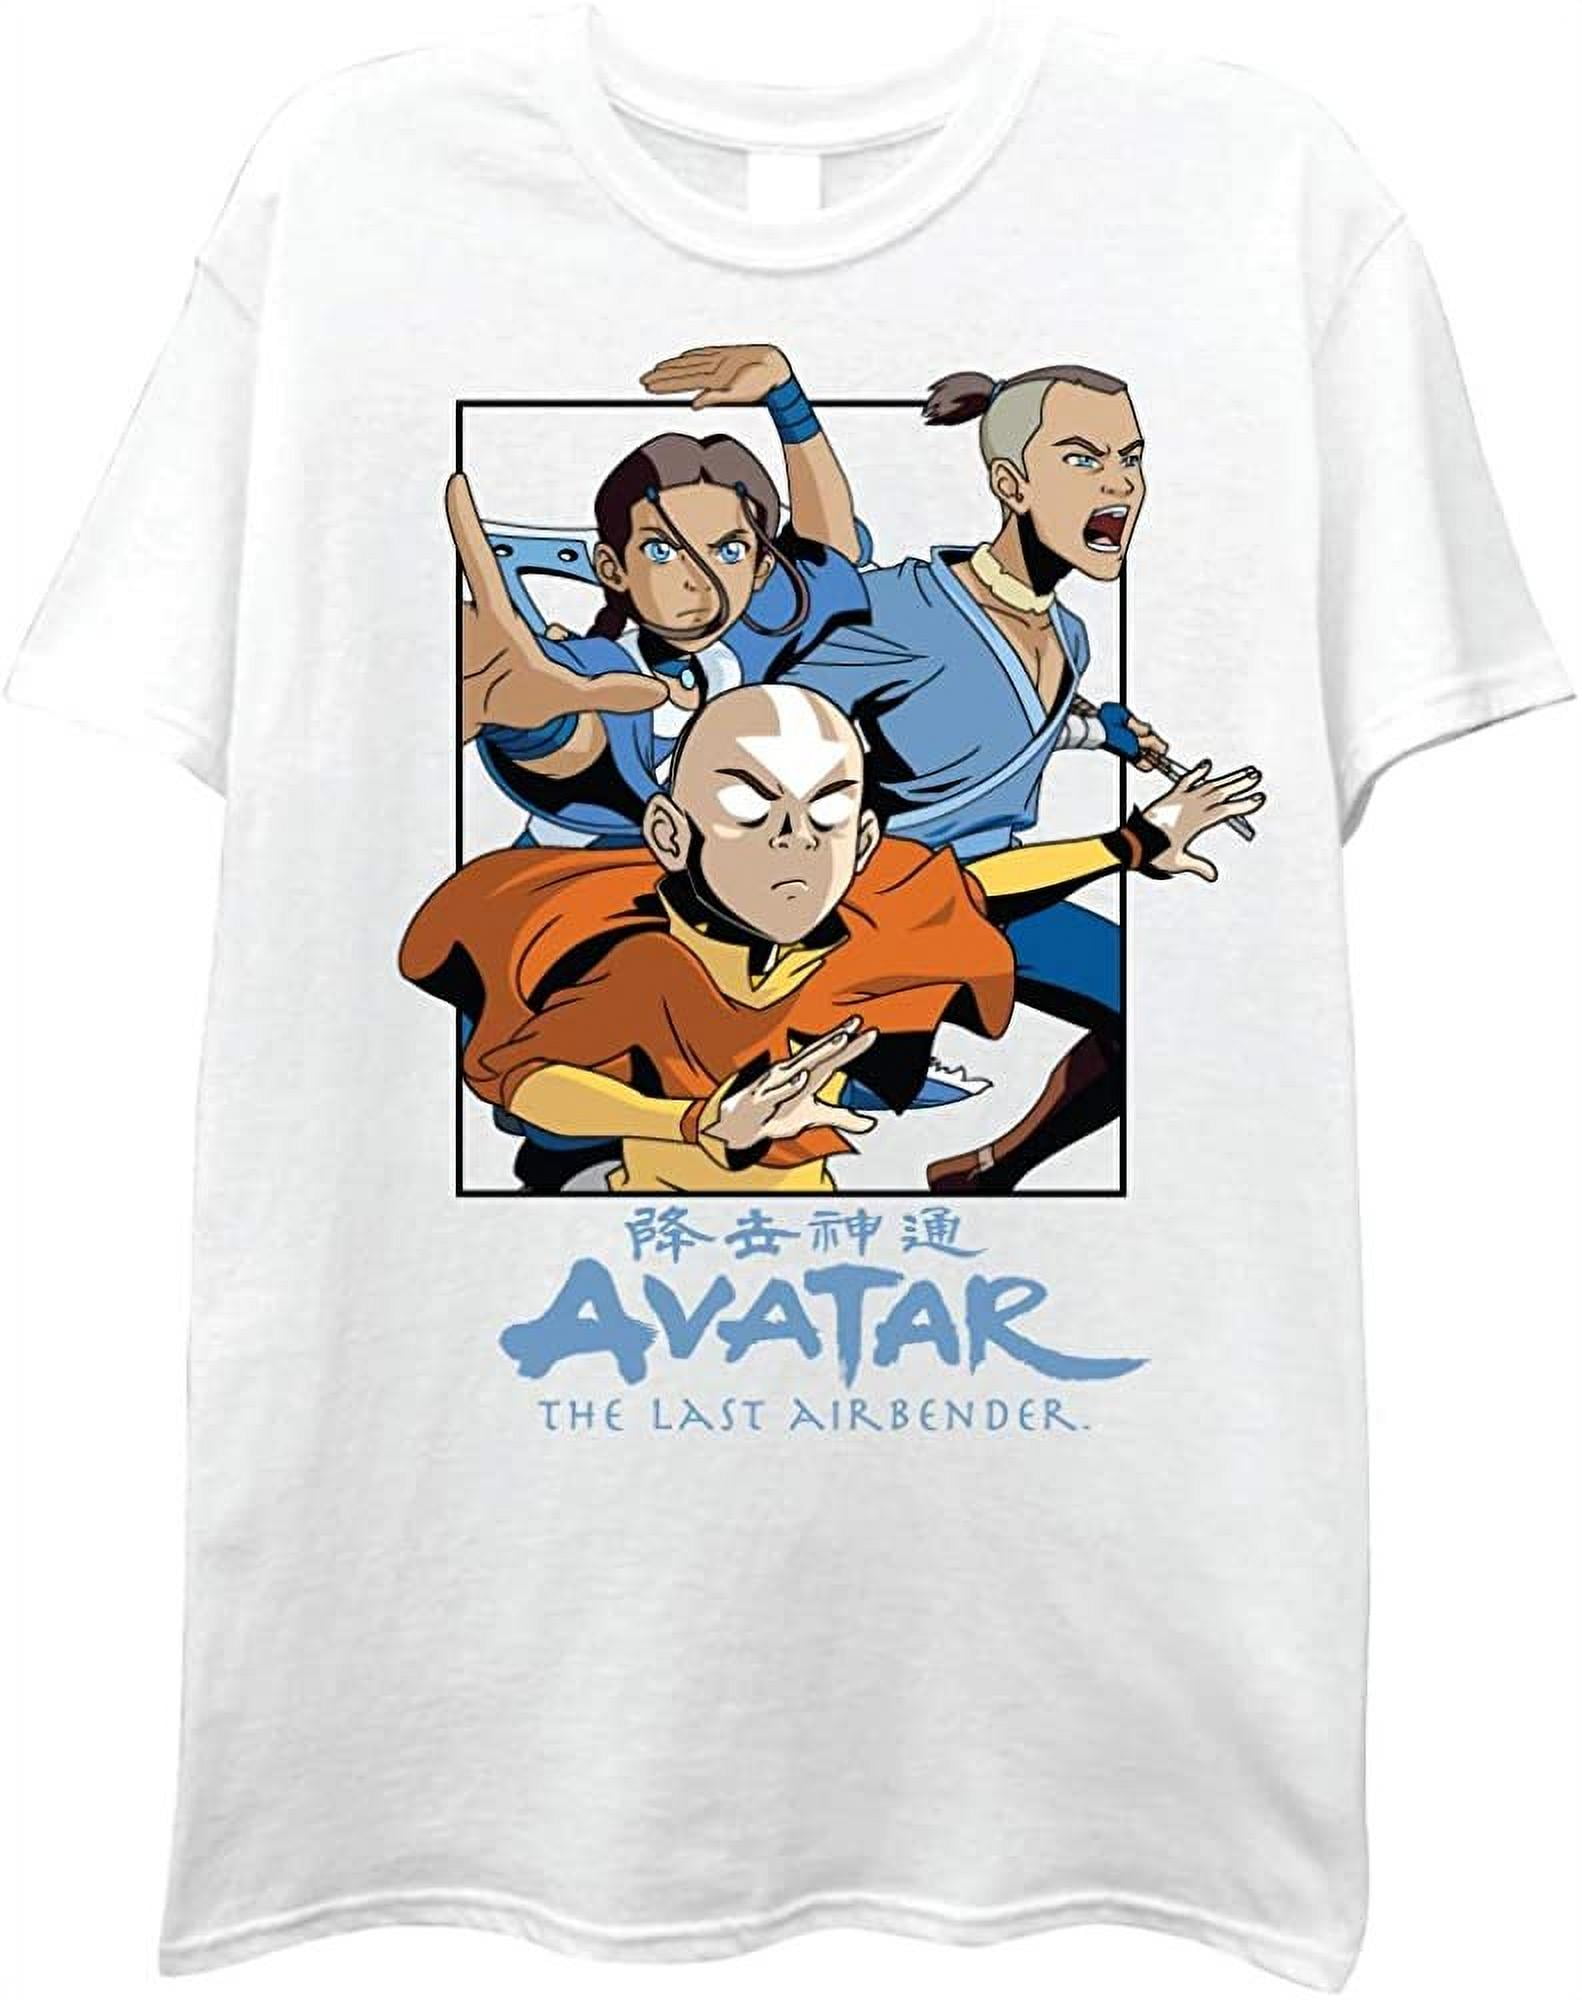 Avatar The Last Airbender TShirts for Sale  TeePublic